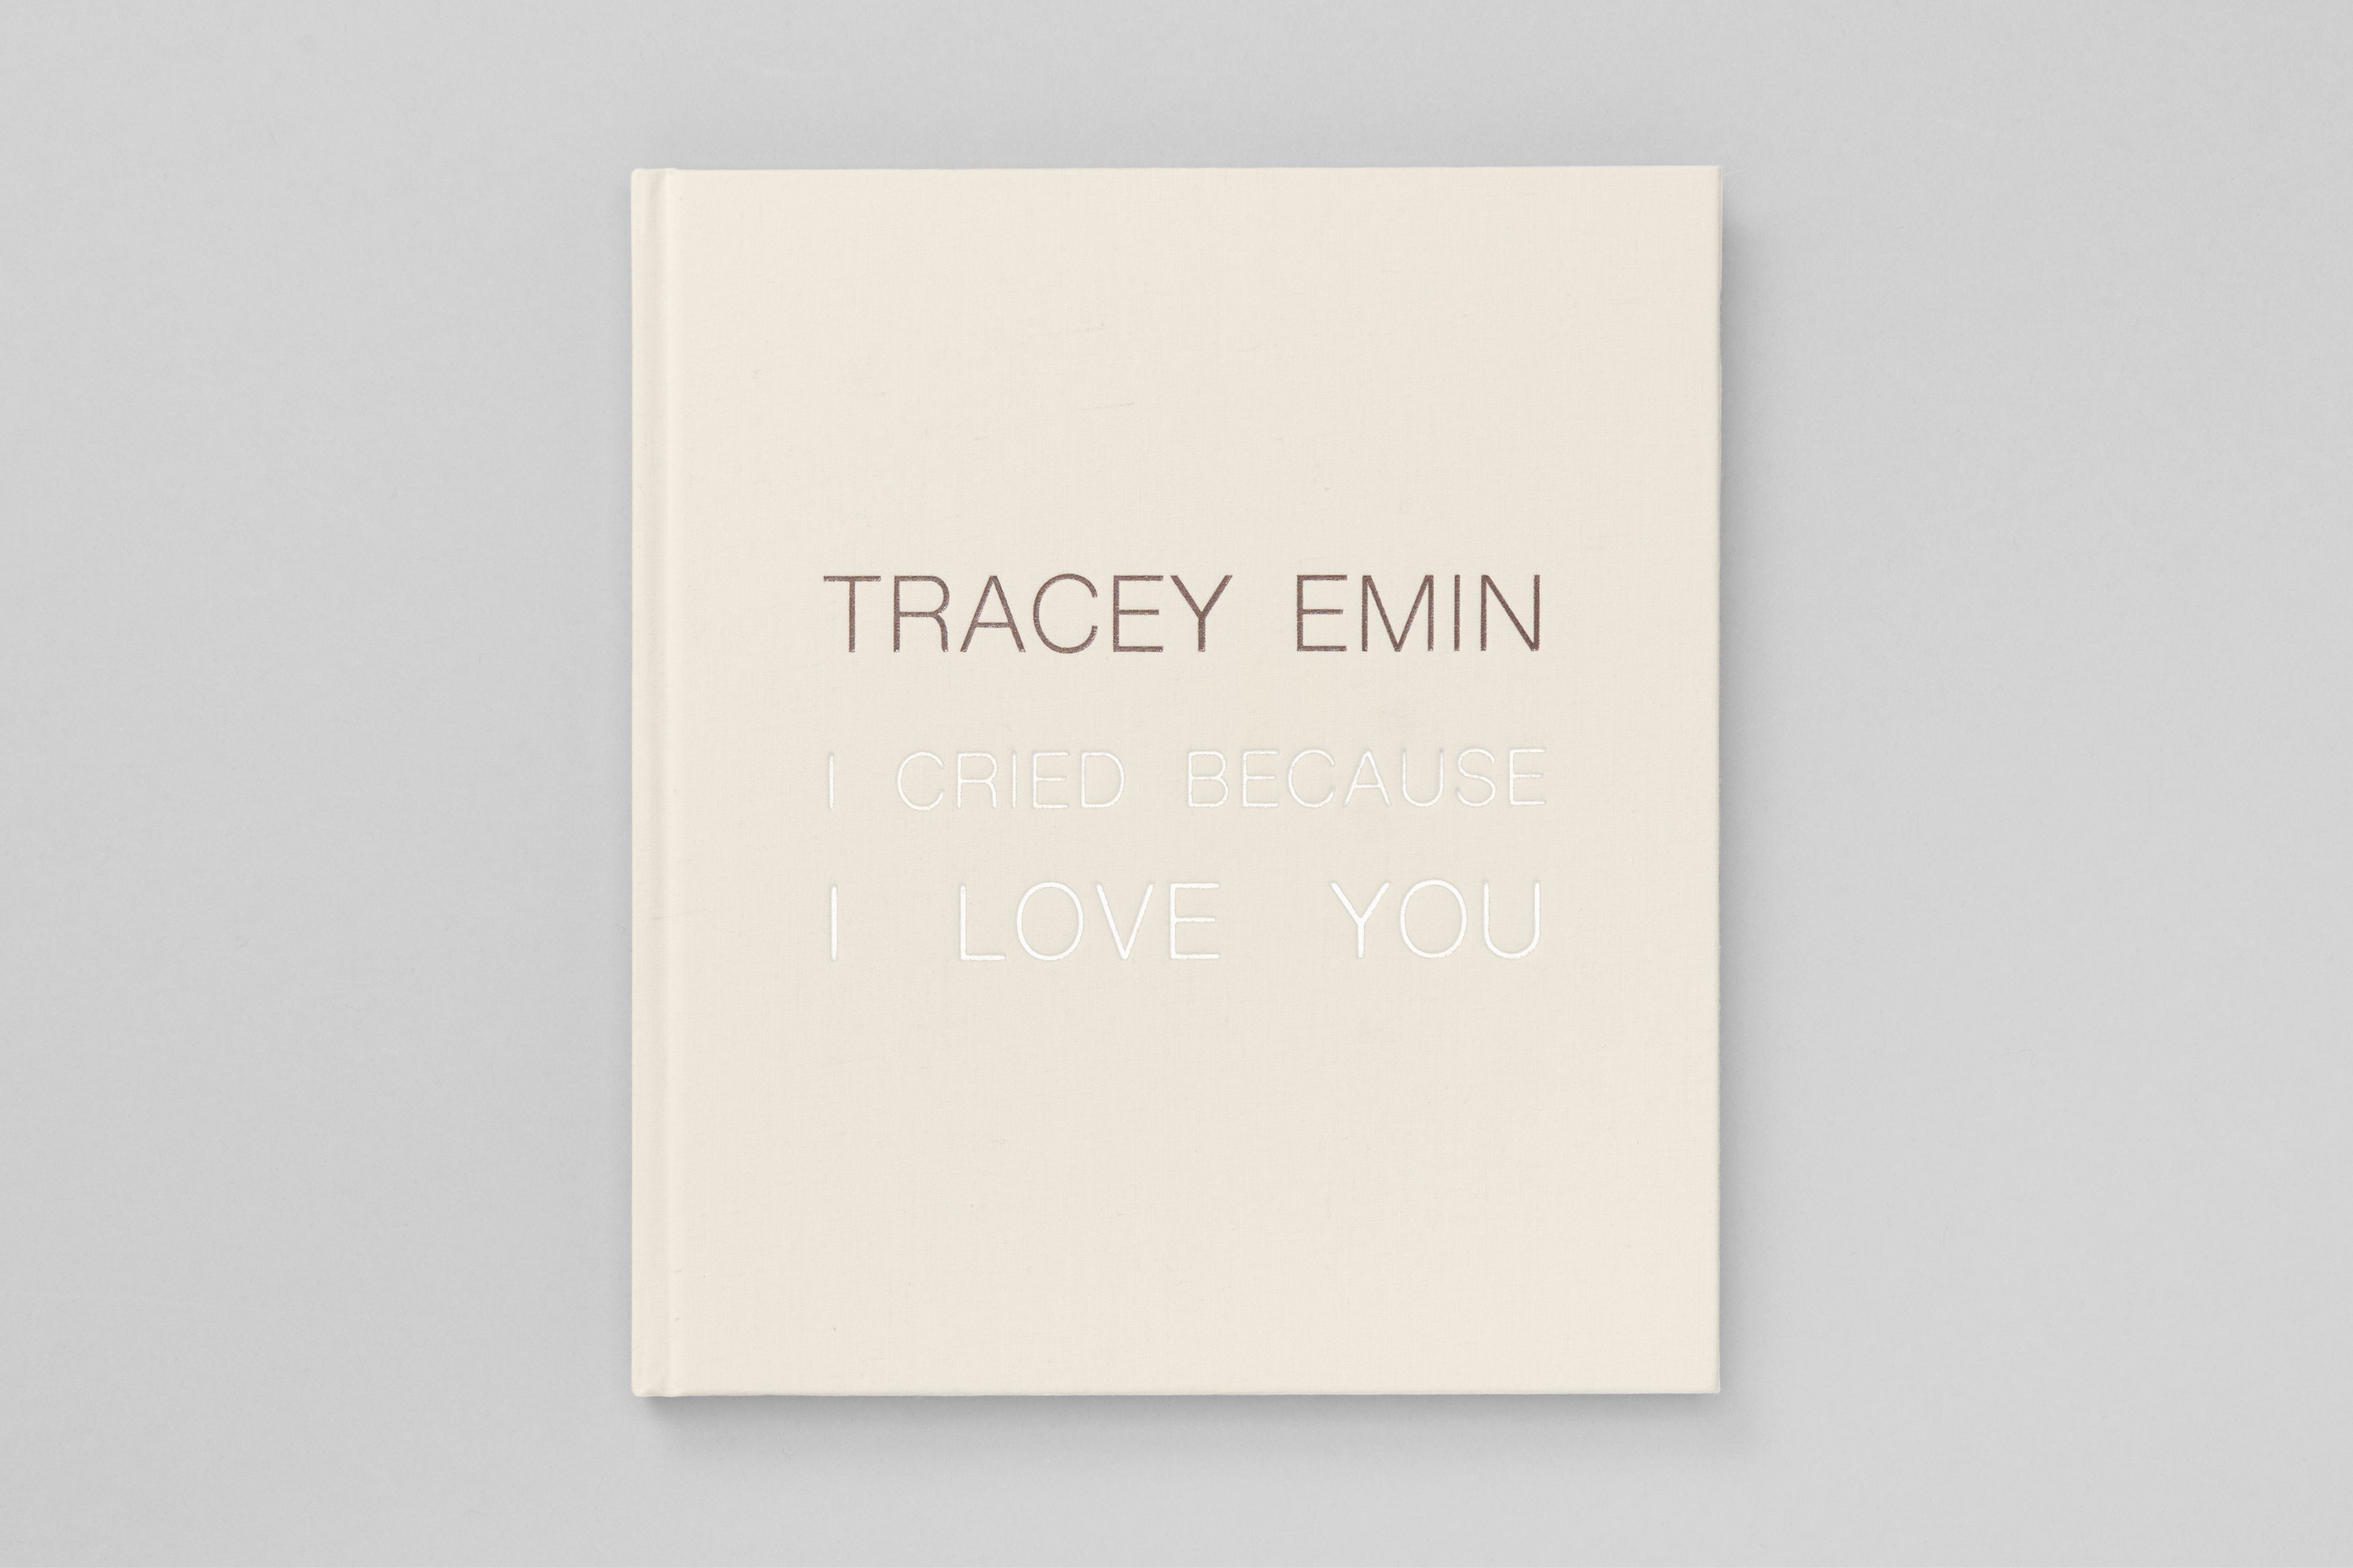 Tracey Emin 'I Cried Because I Love You' (2016)